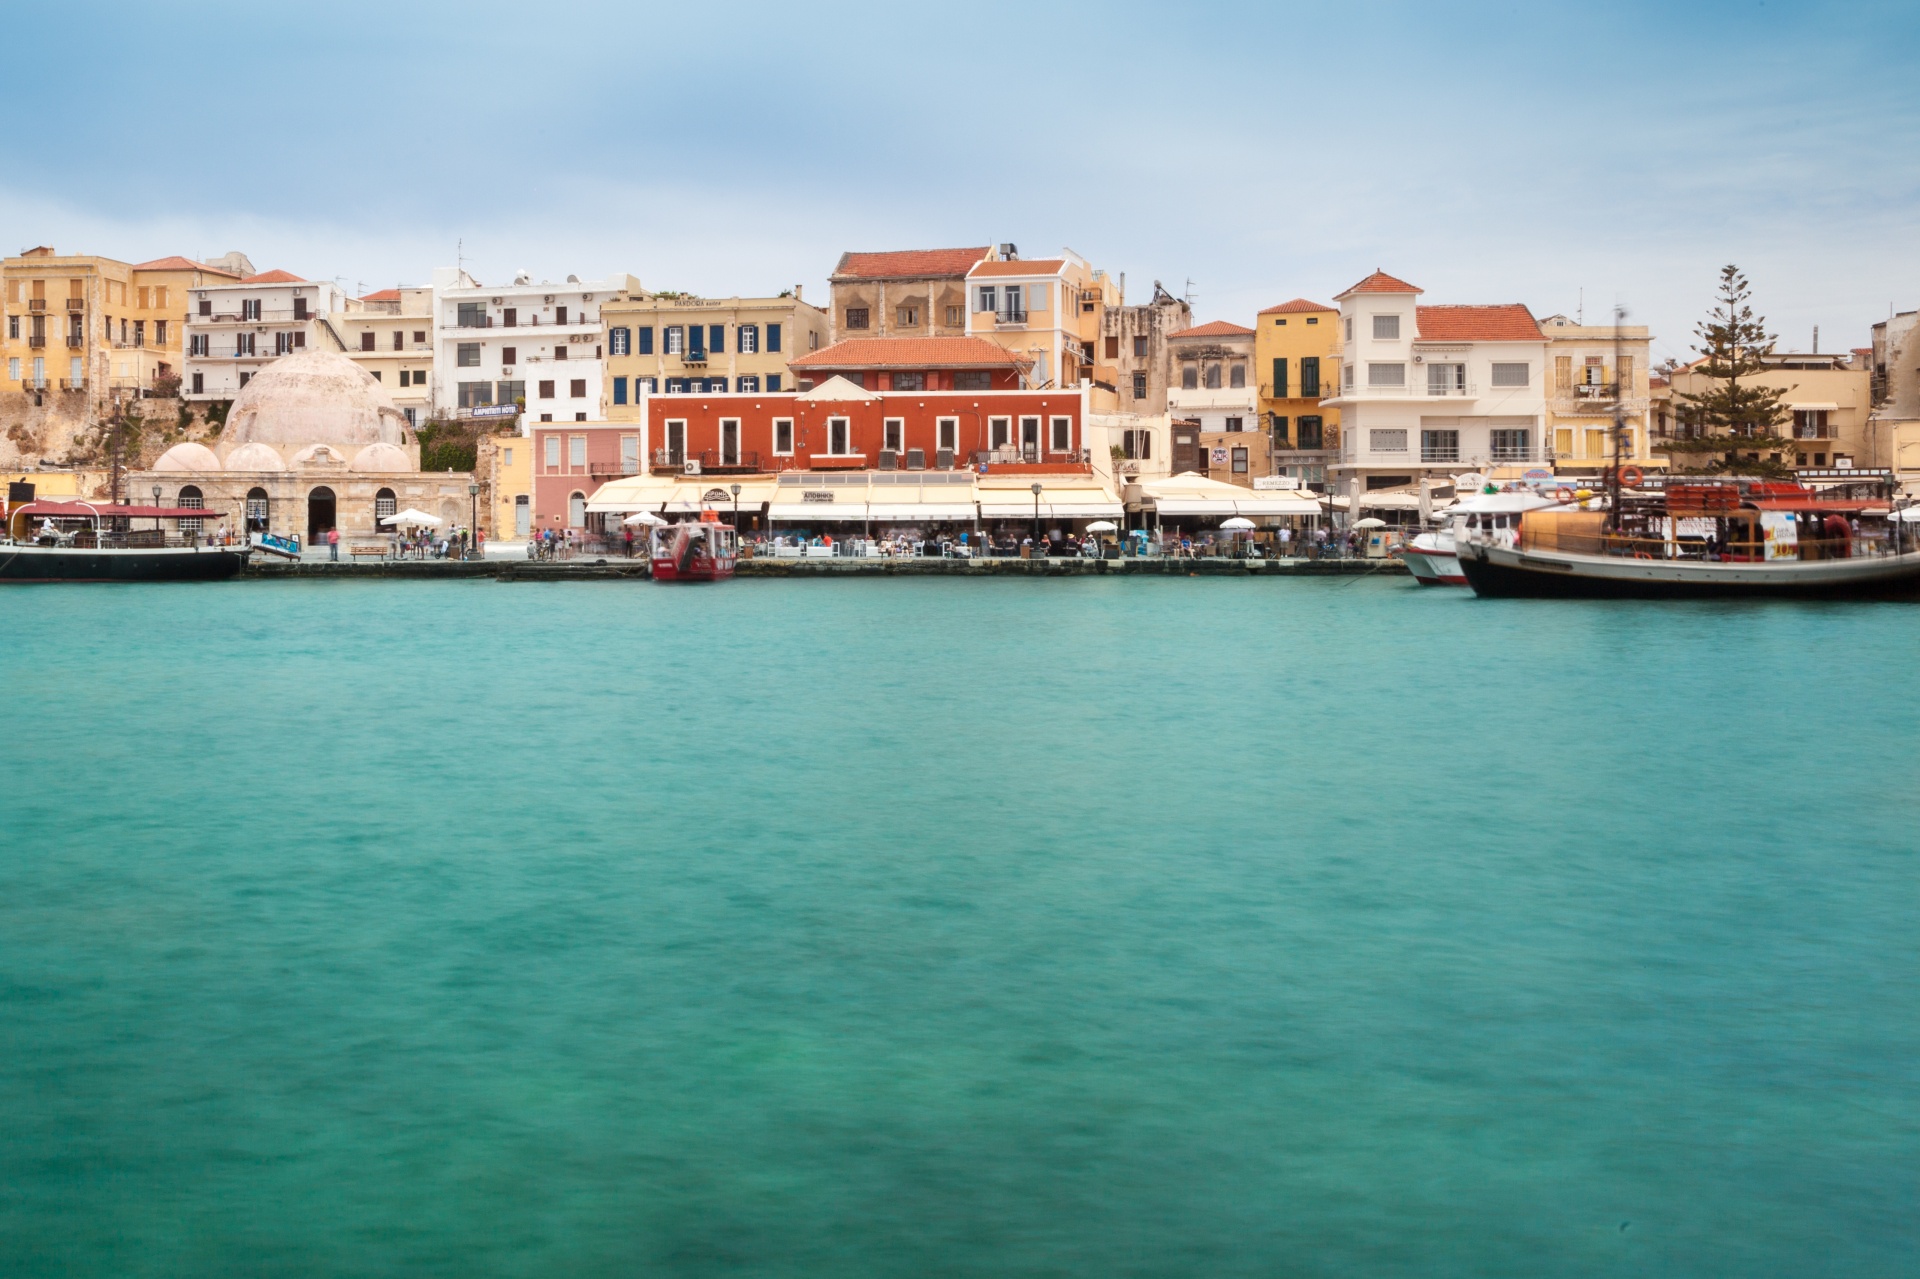 Old Venetian Harbor in Chania, Crete